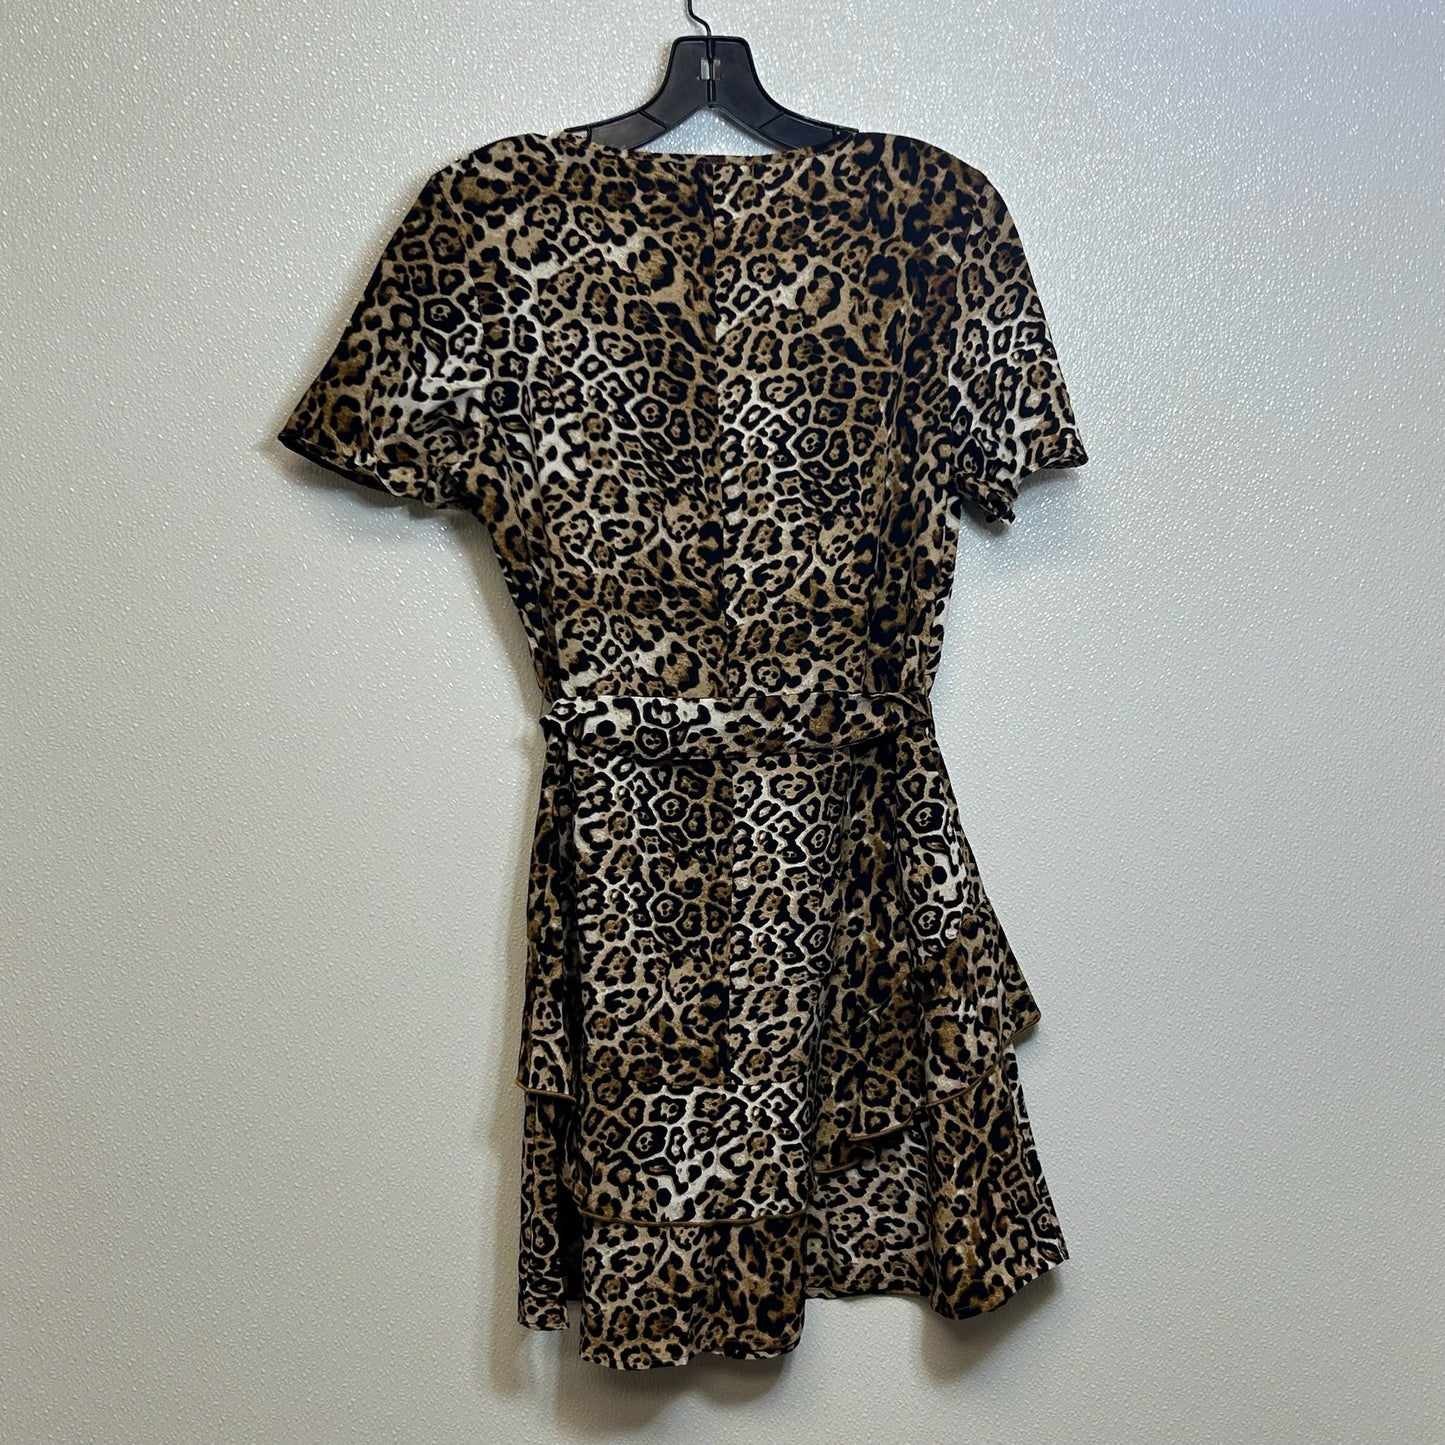 Leopard Print Dress Casual Short Clothes Mentor, Size M